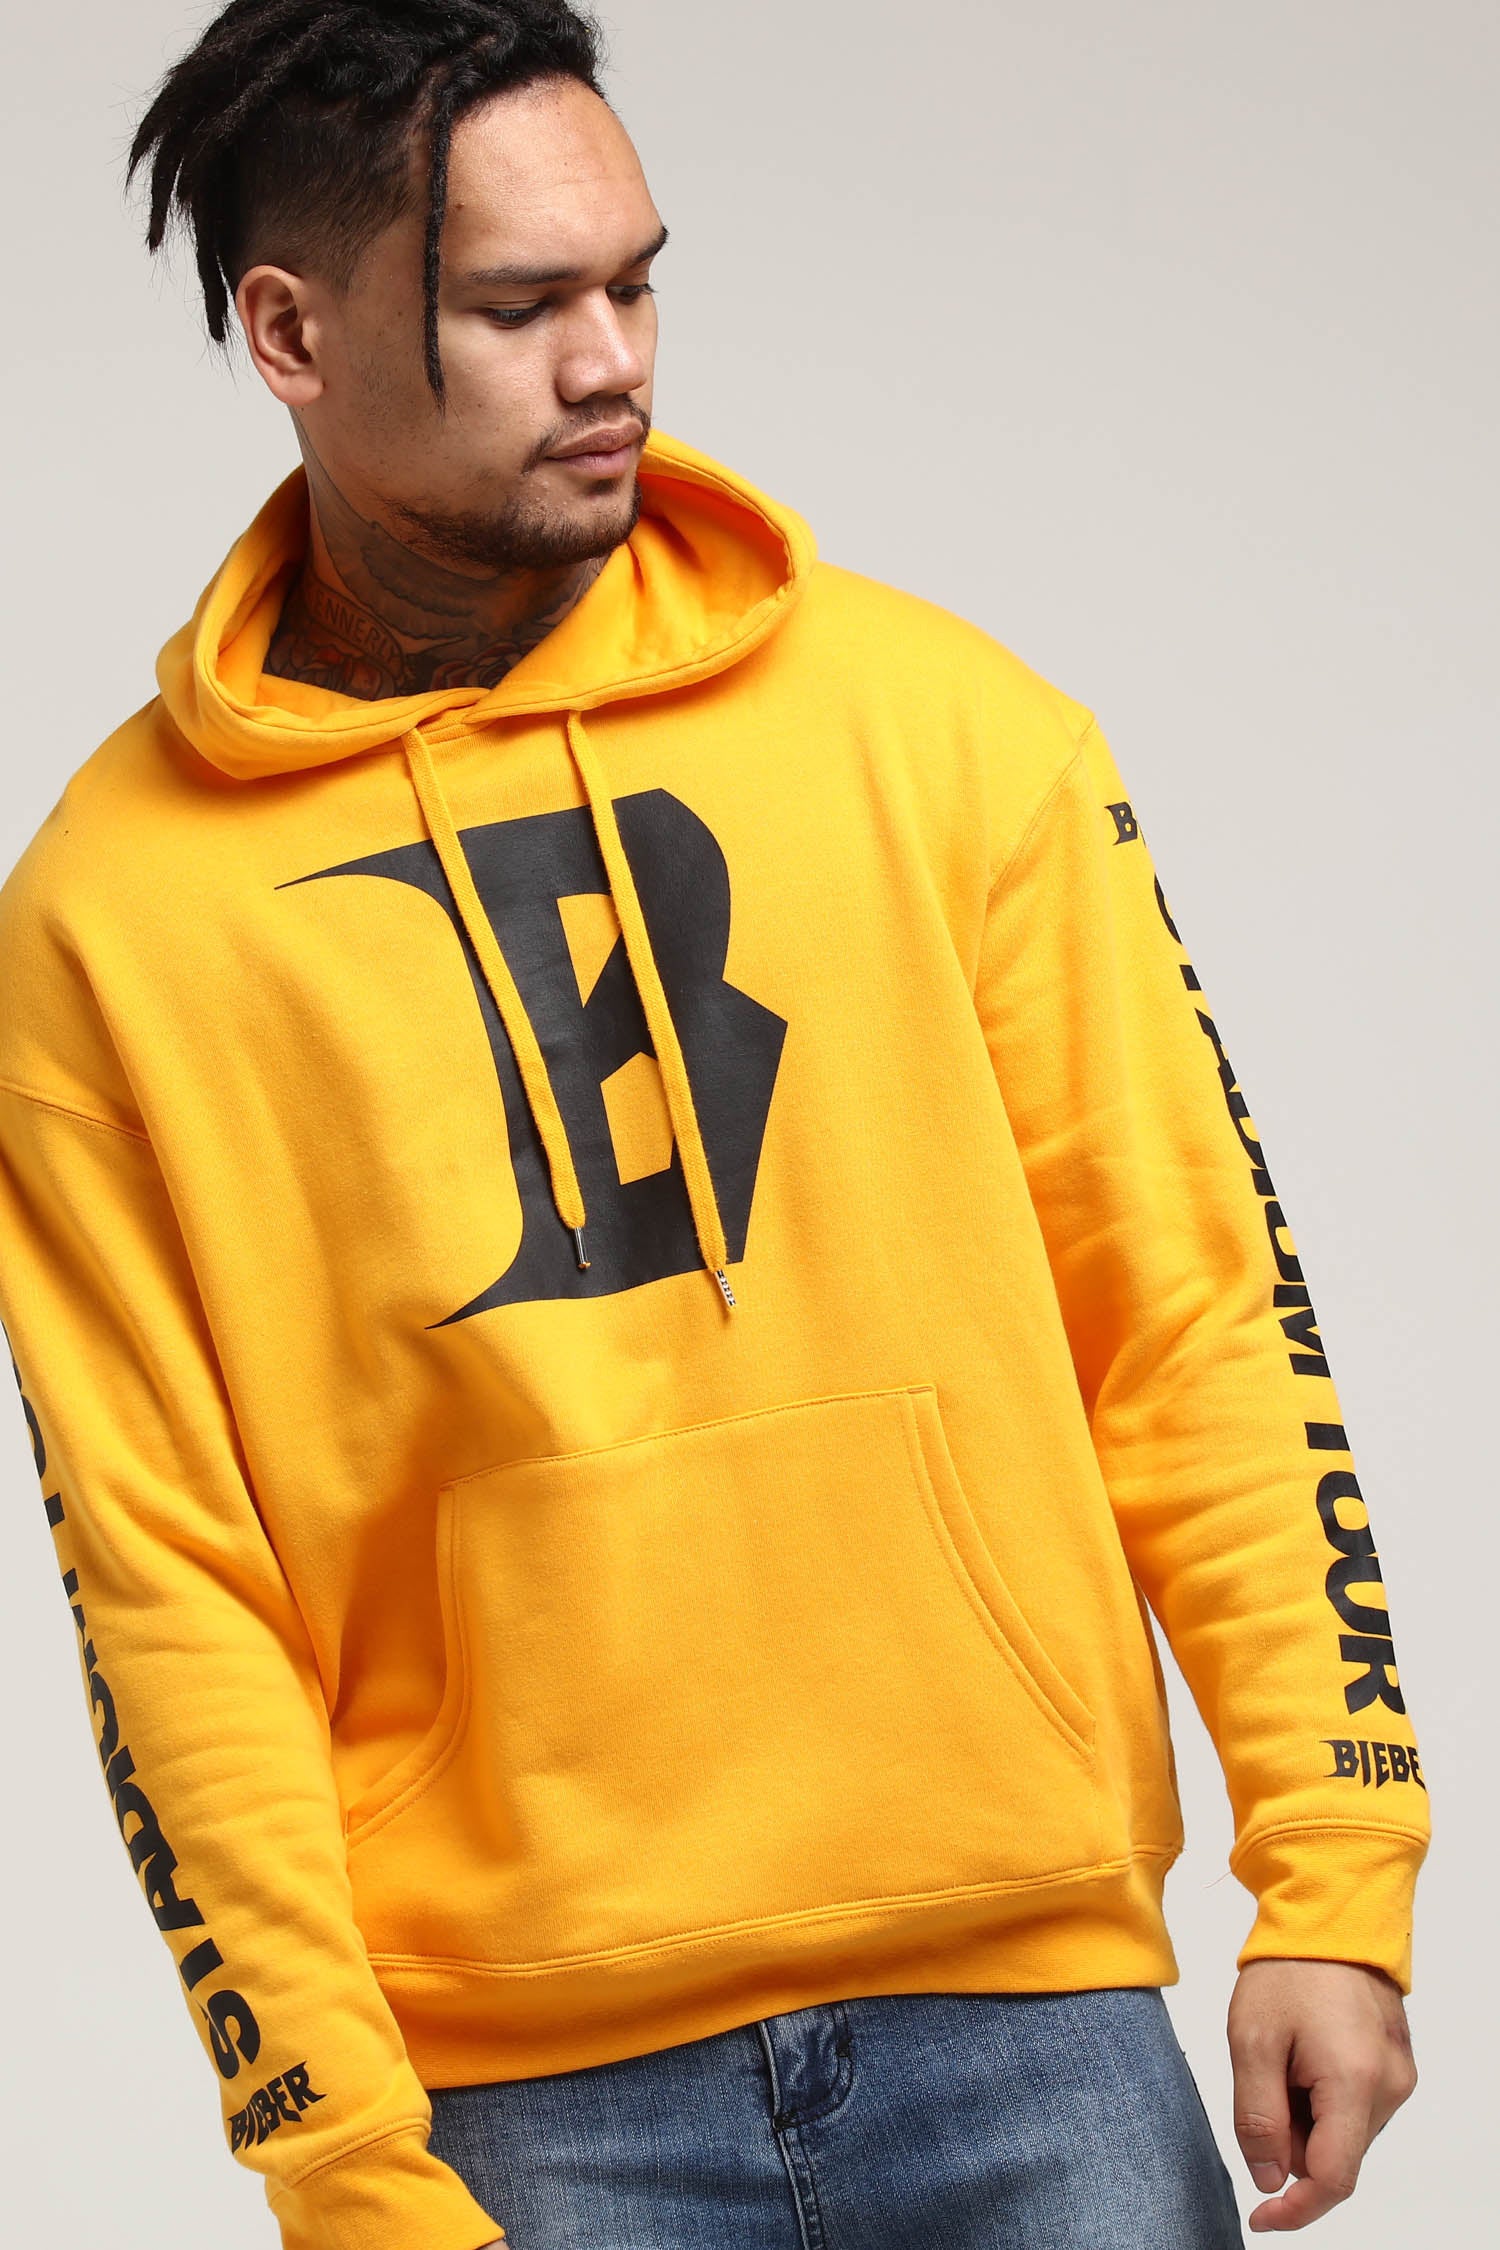 justin bieber hoodie yellow